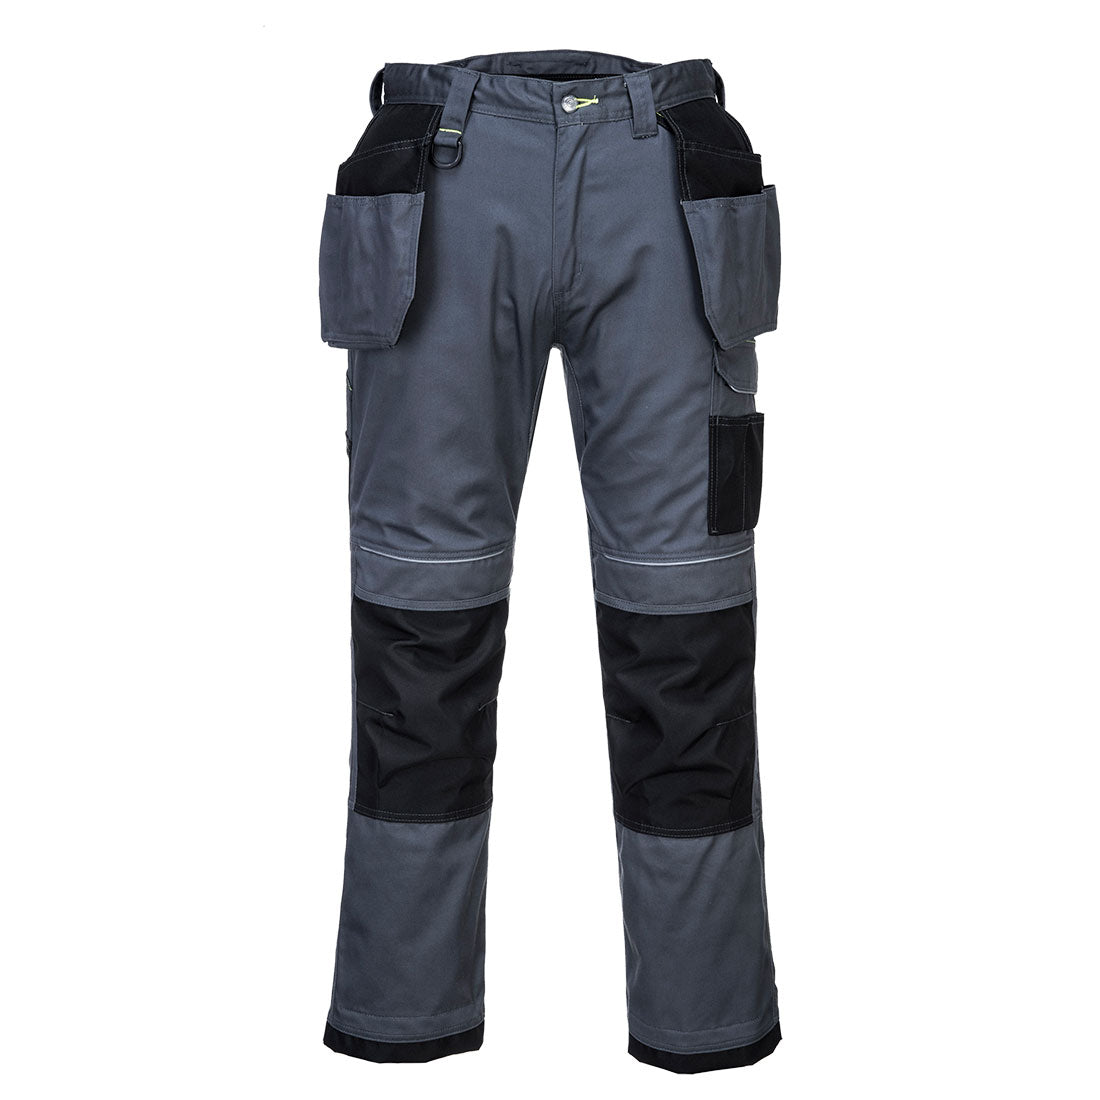 Portwest T602 - Grey/Black  44 Regular PW3 Holster Work Trousers Combat Cargo Pants